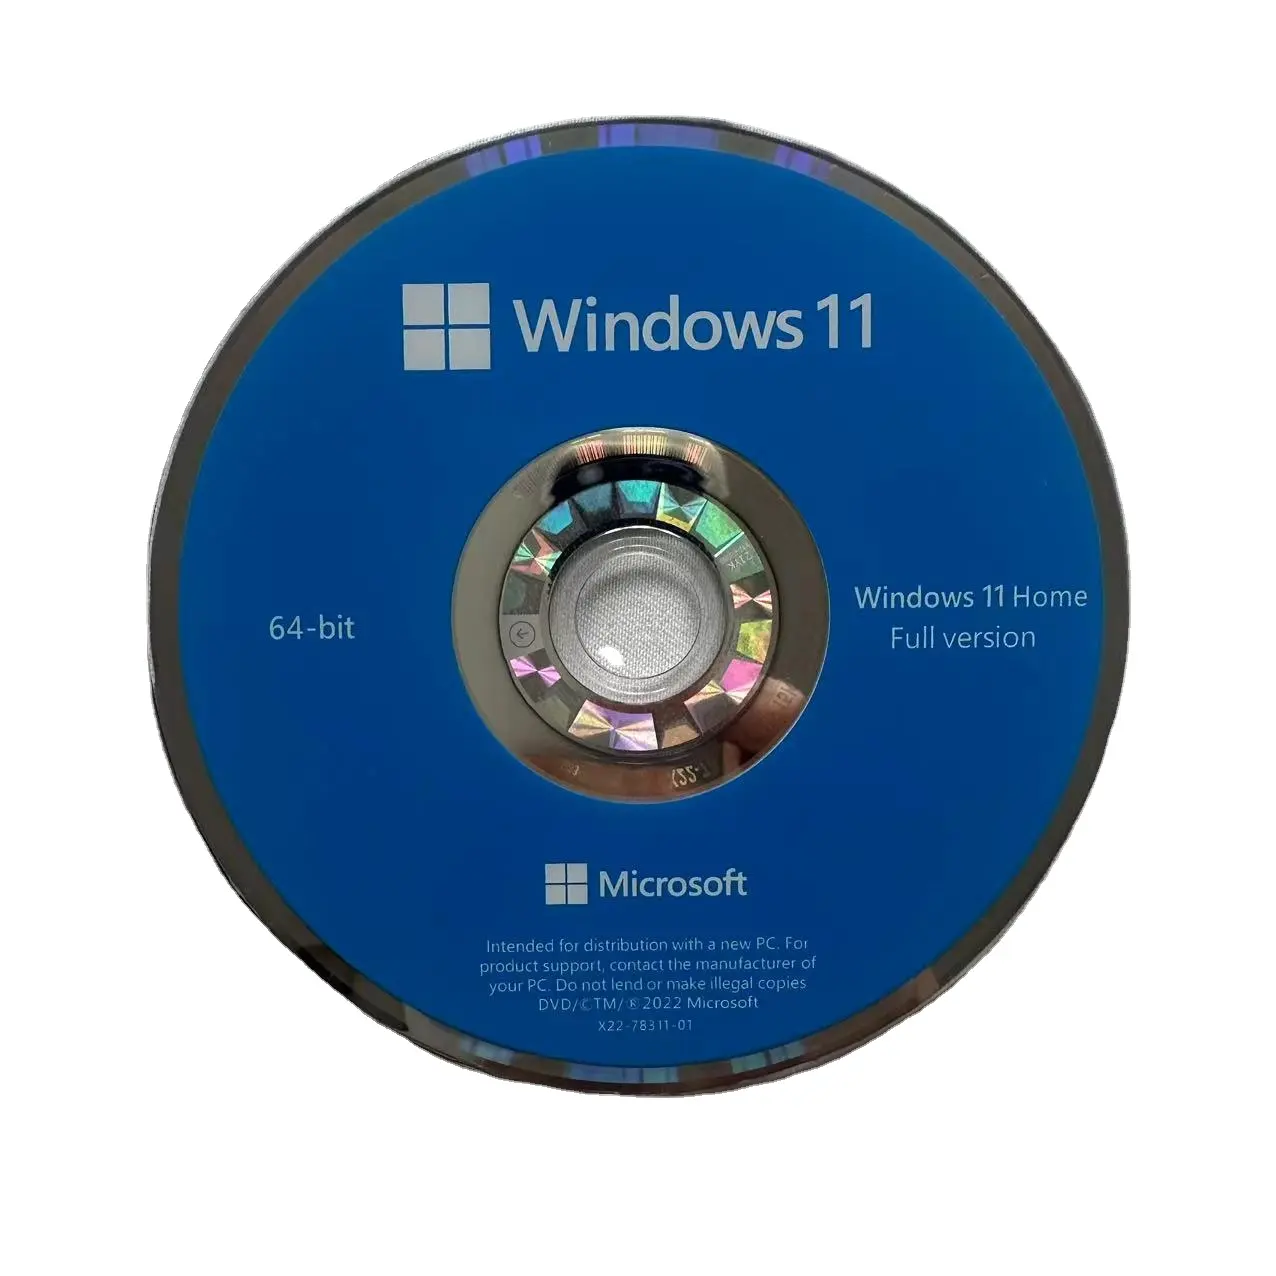 Microsoft Windows 11 Home Key Full Package DVD 1 set = 5 pcs Multi-language Windows 11 Home Dsp Windows 11 Home DVD